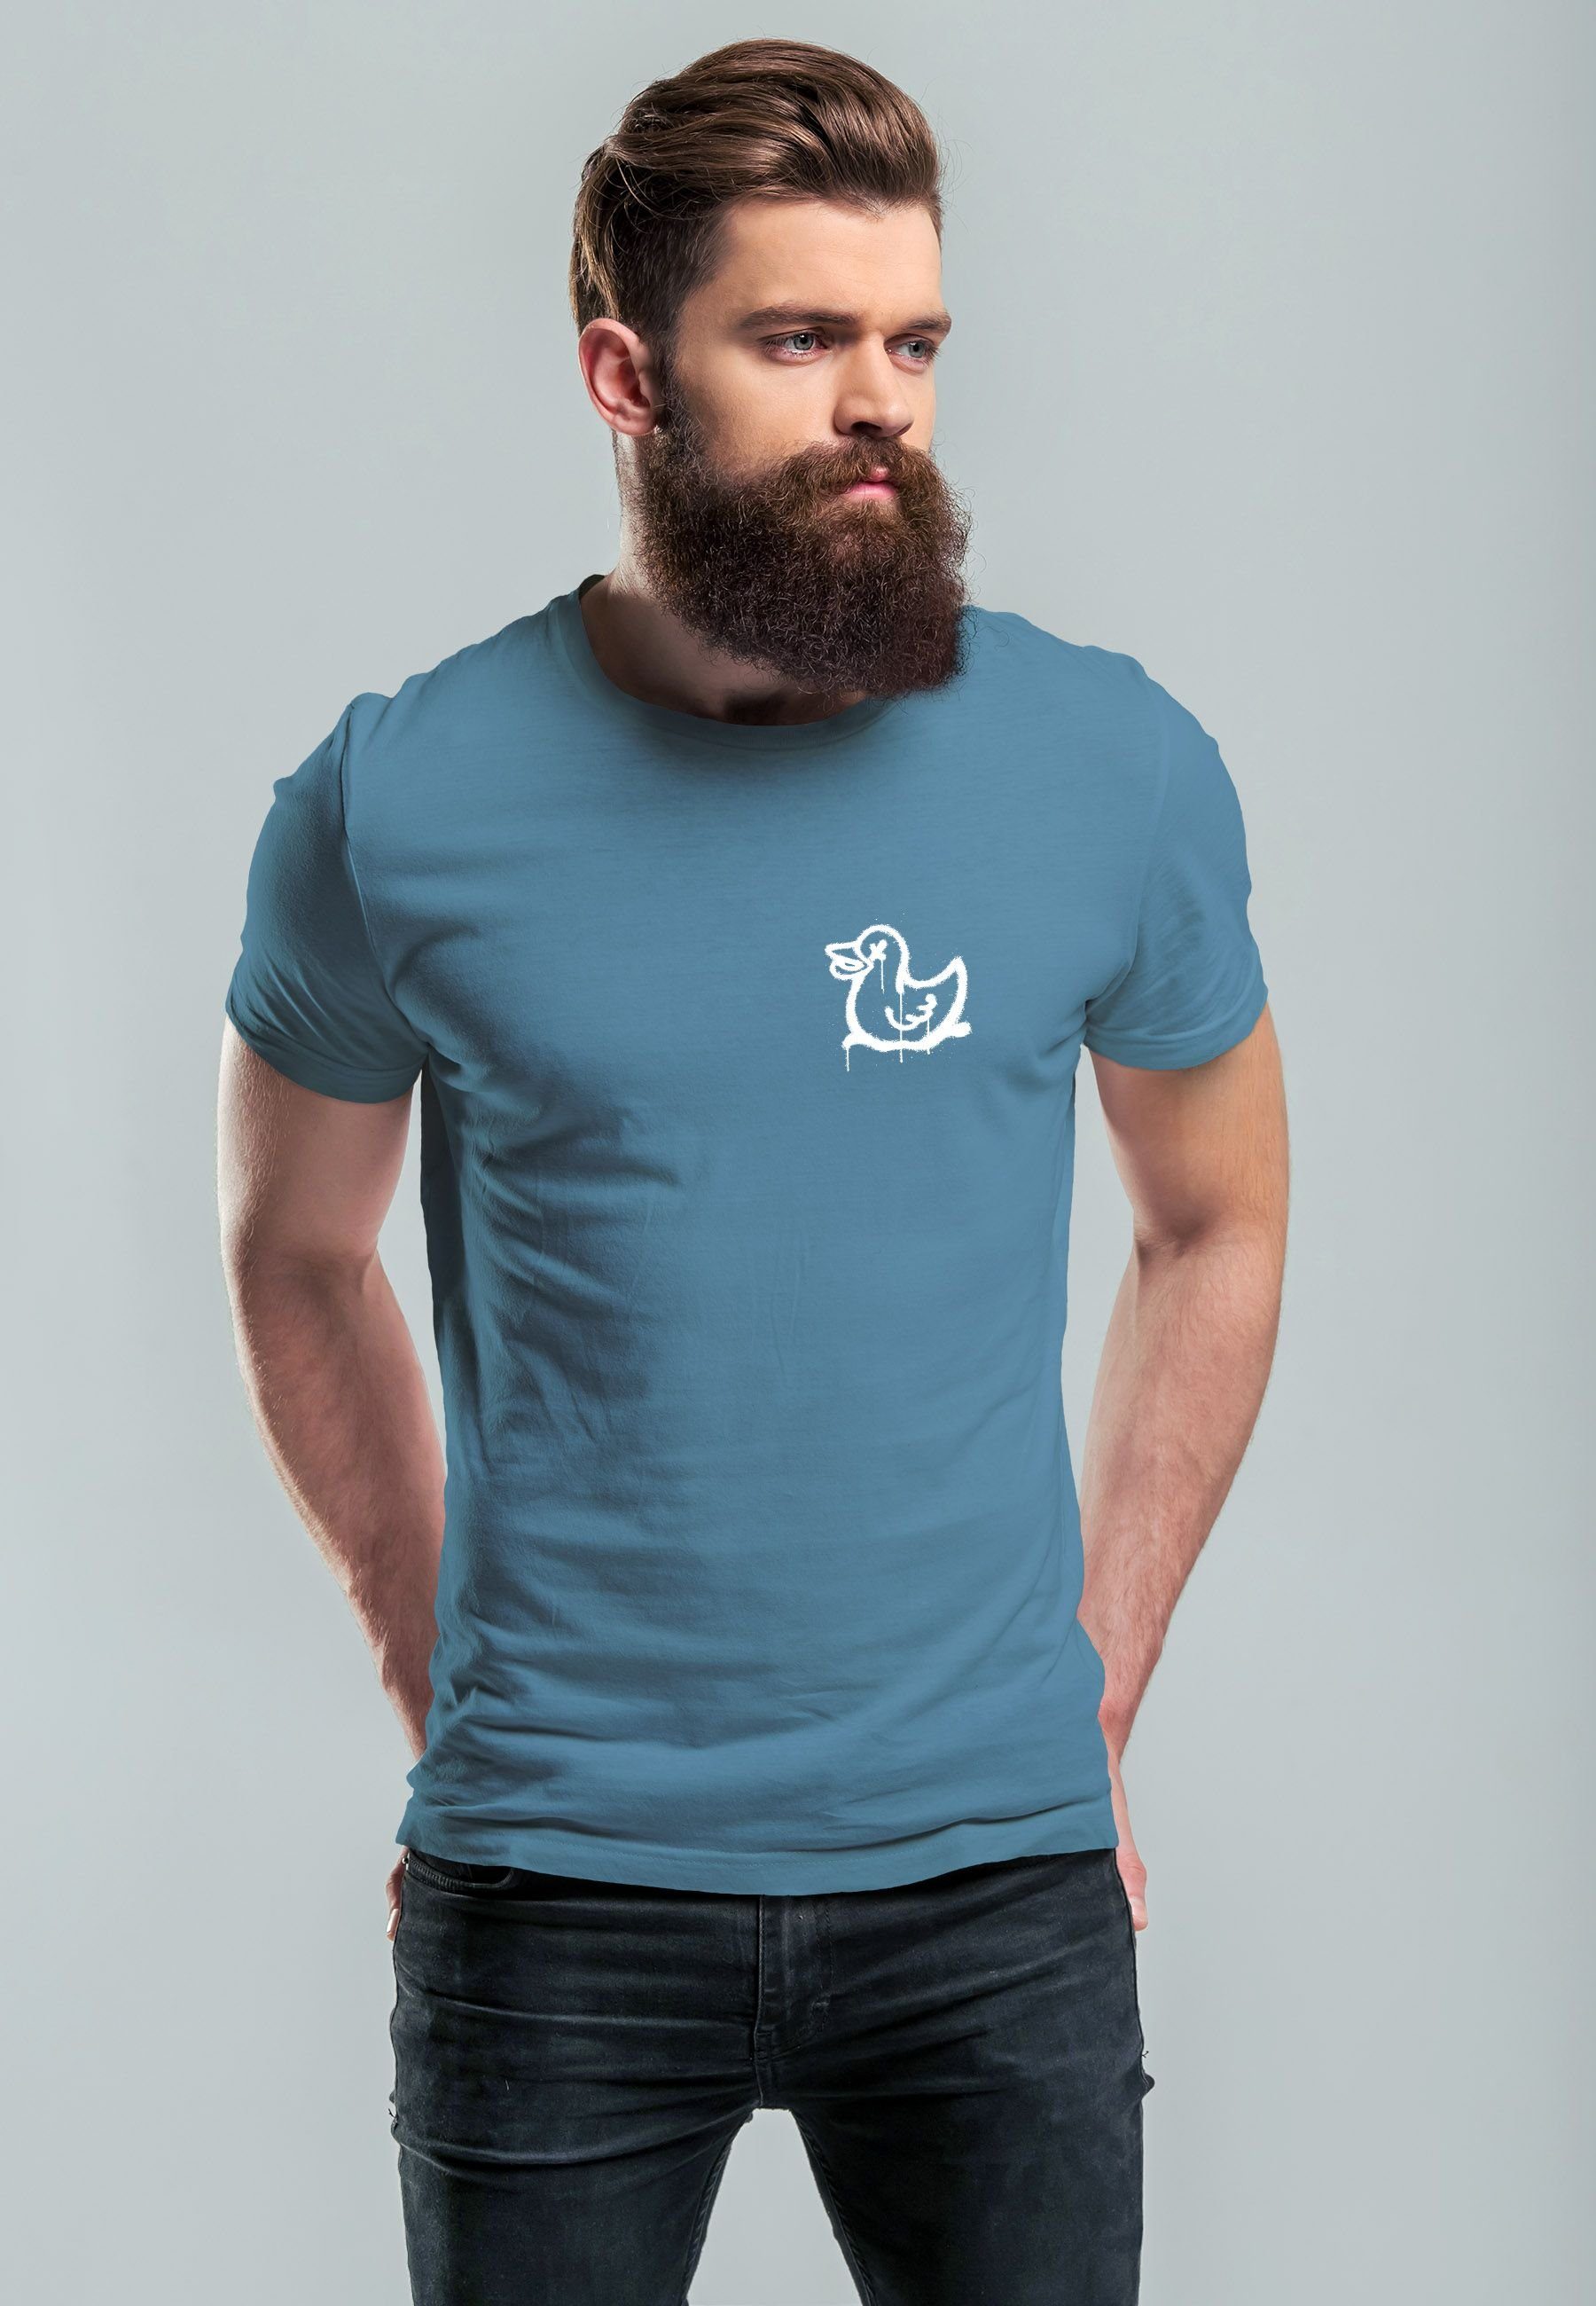 Ente Drippy Style Stre Print-Shirt Print blue Fashion stone mit Duck T-Shirt Neverless Printshirt Graffiti Herren